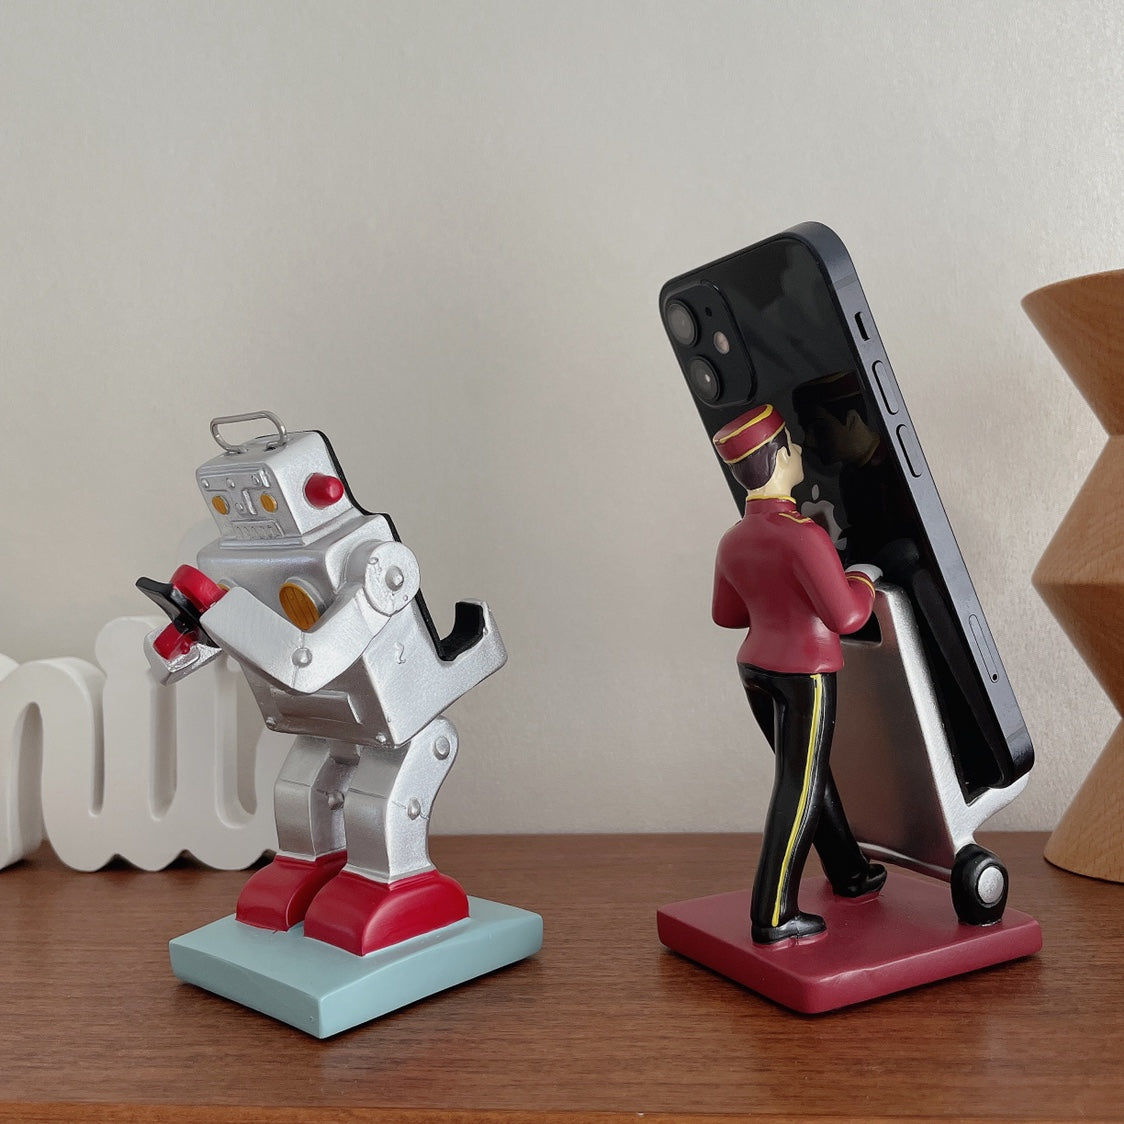 Retro Fun Robot Mobile Phone Stand